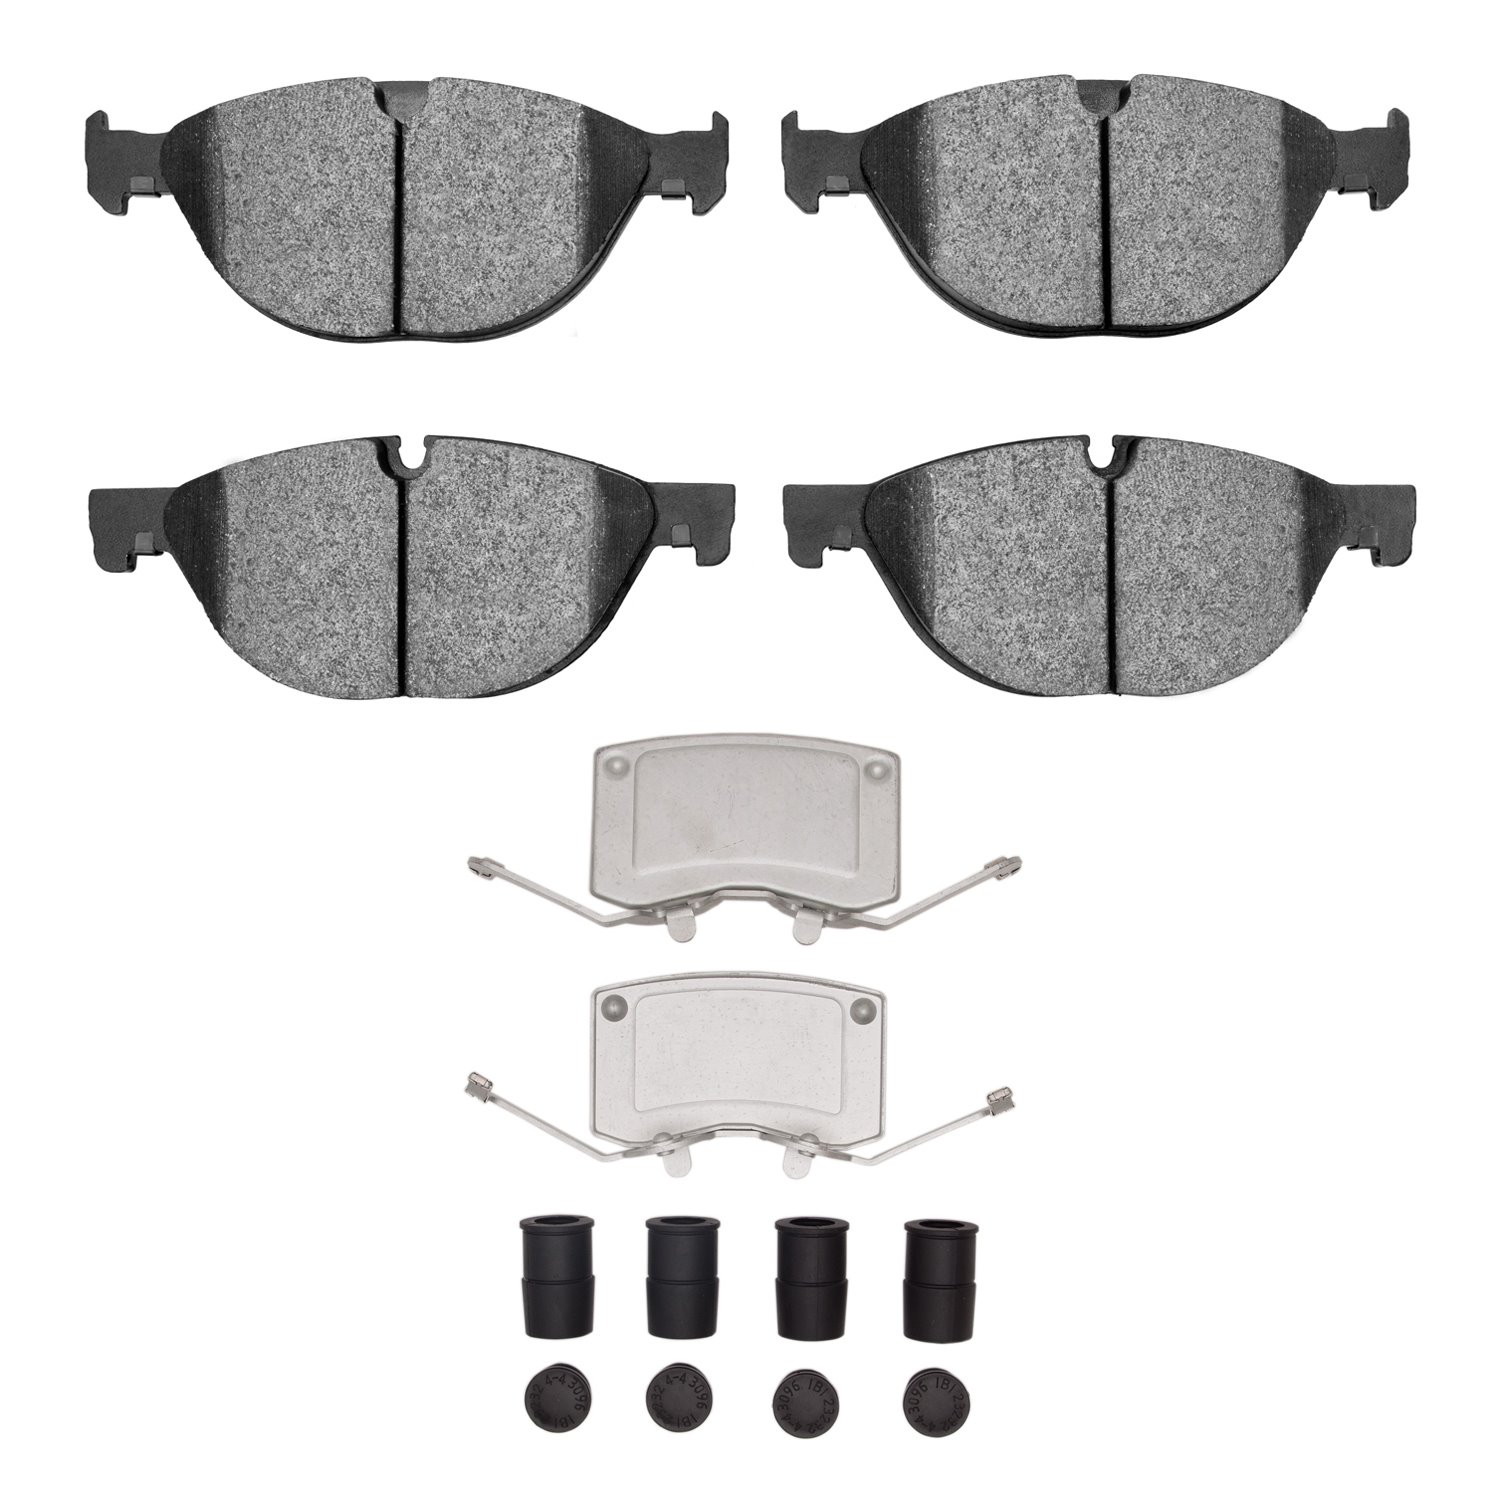 1600-1448-01 5000 Euro Ceramic Brake Pads & Hardware Kit, Fits Select Jaguar, Position: Front